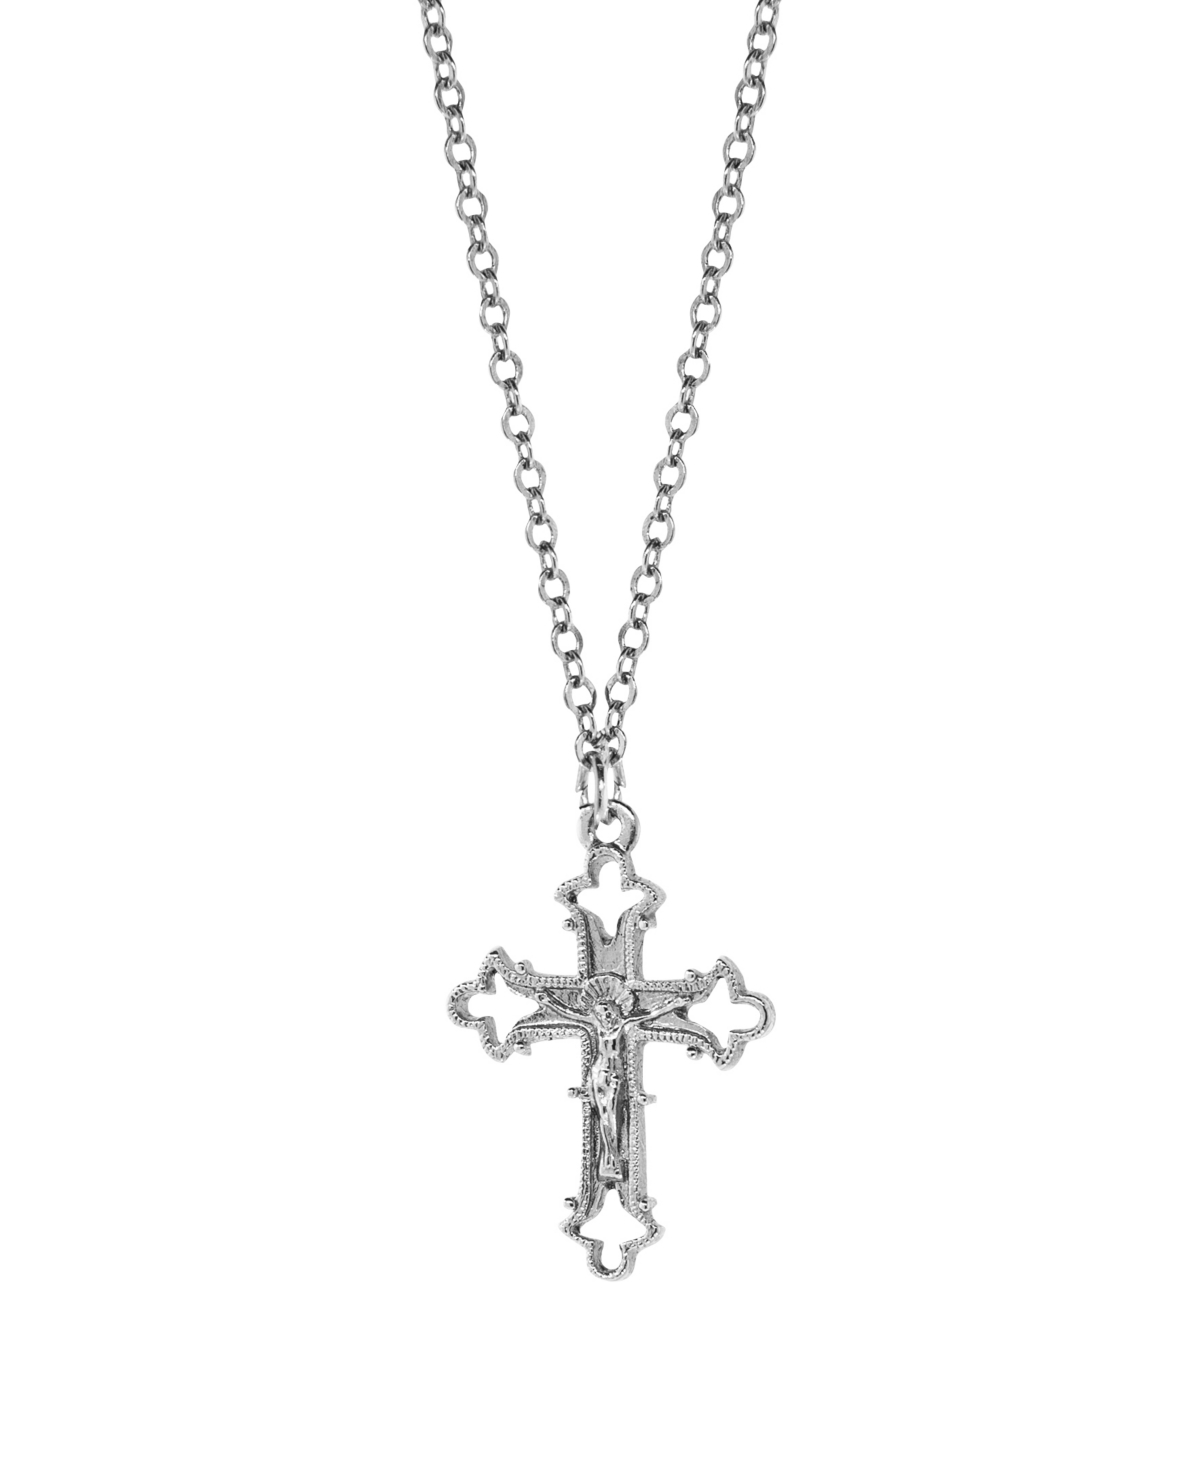 Silver-Tone Crucifix Cross Necklace - Gray